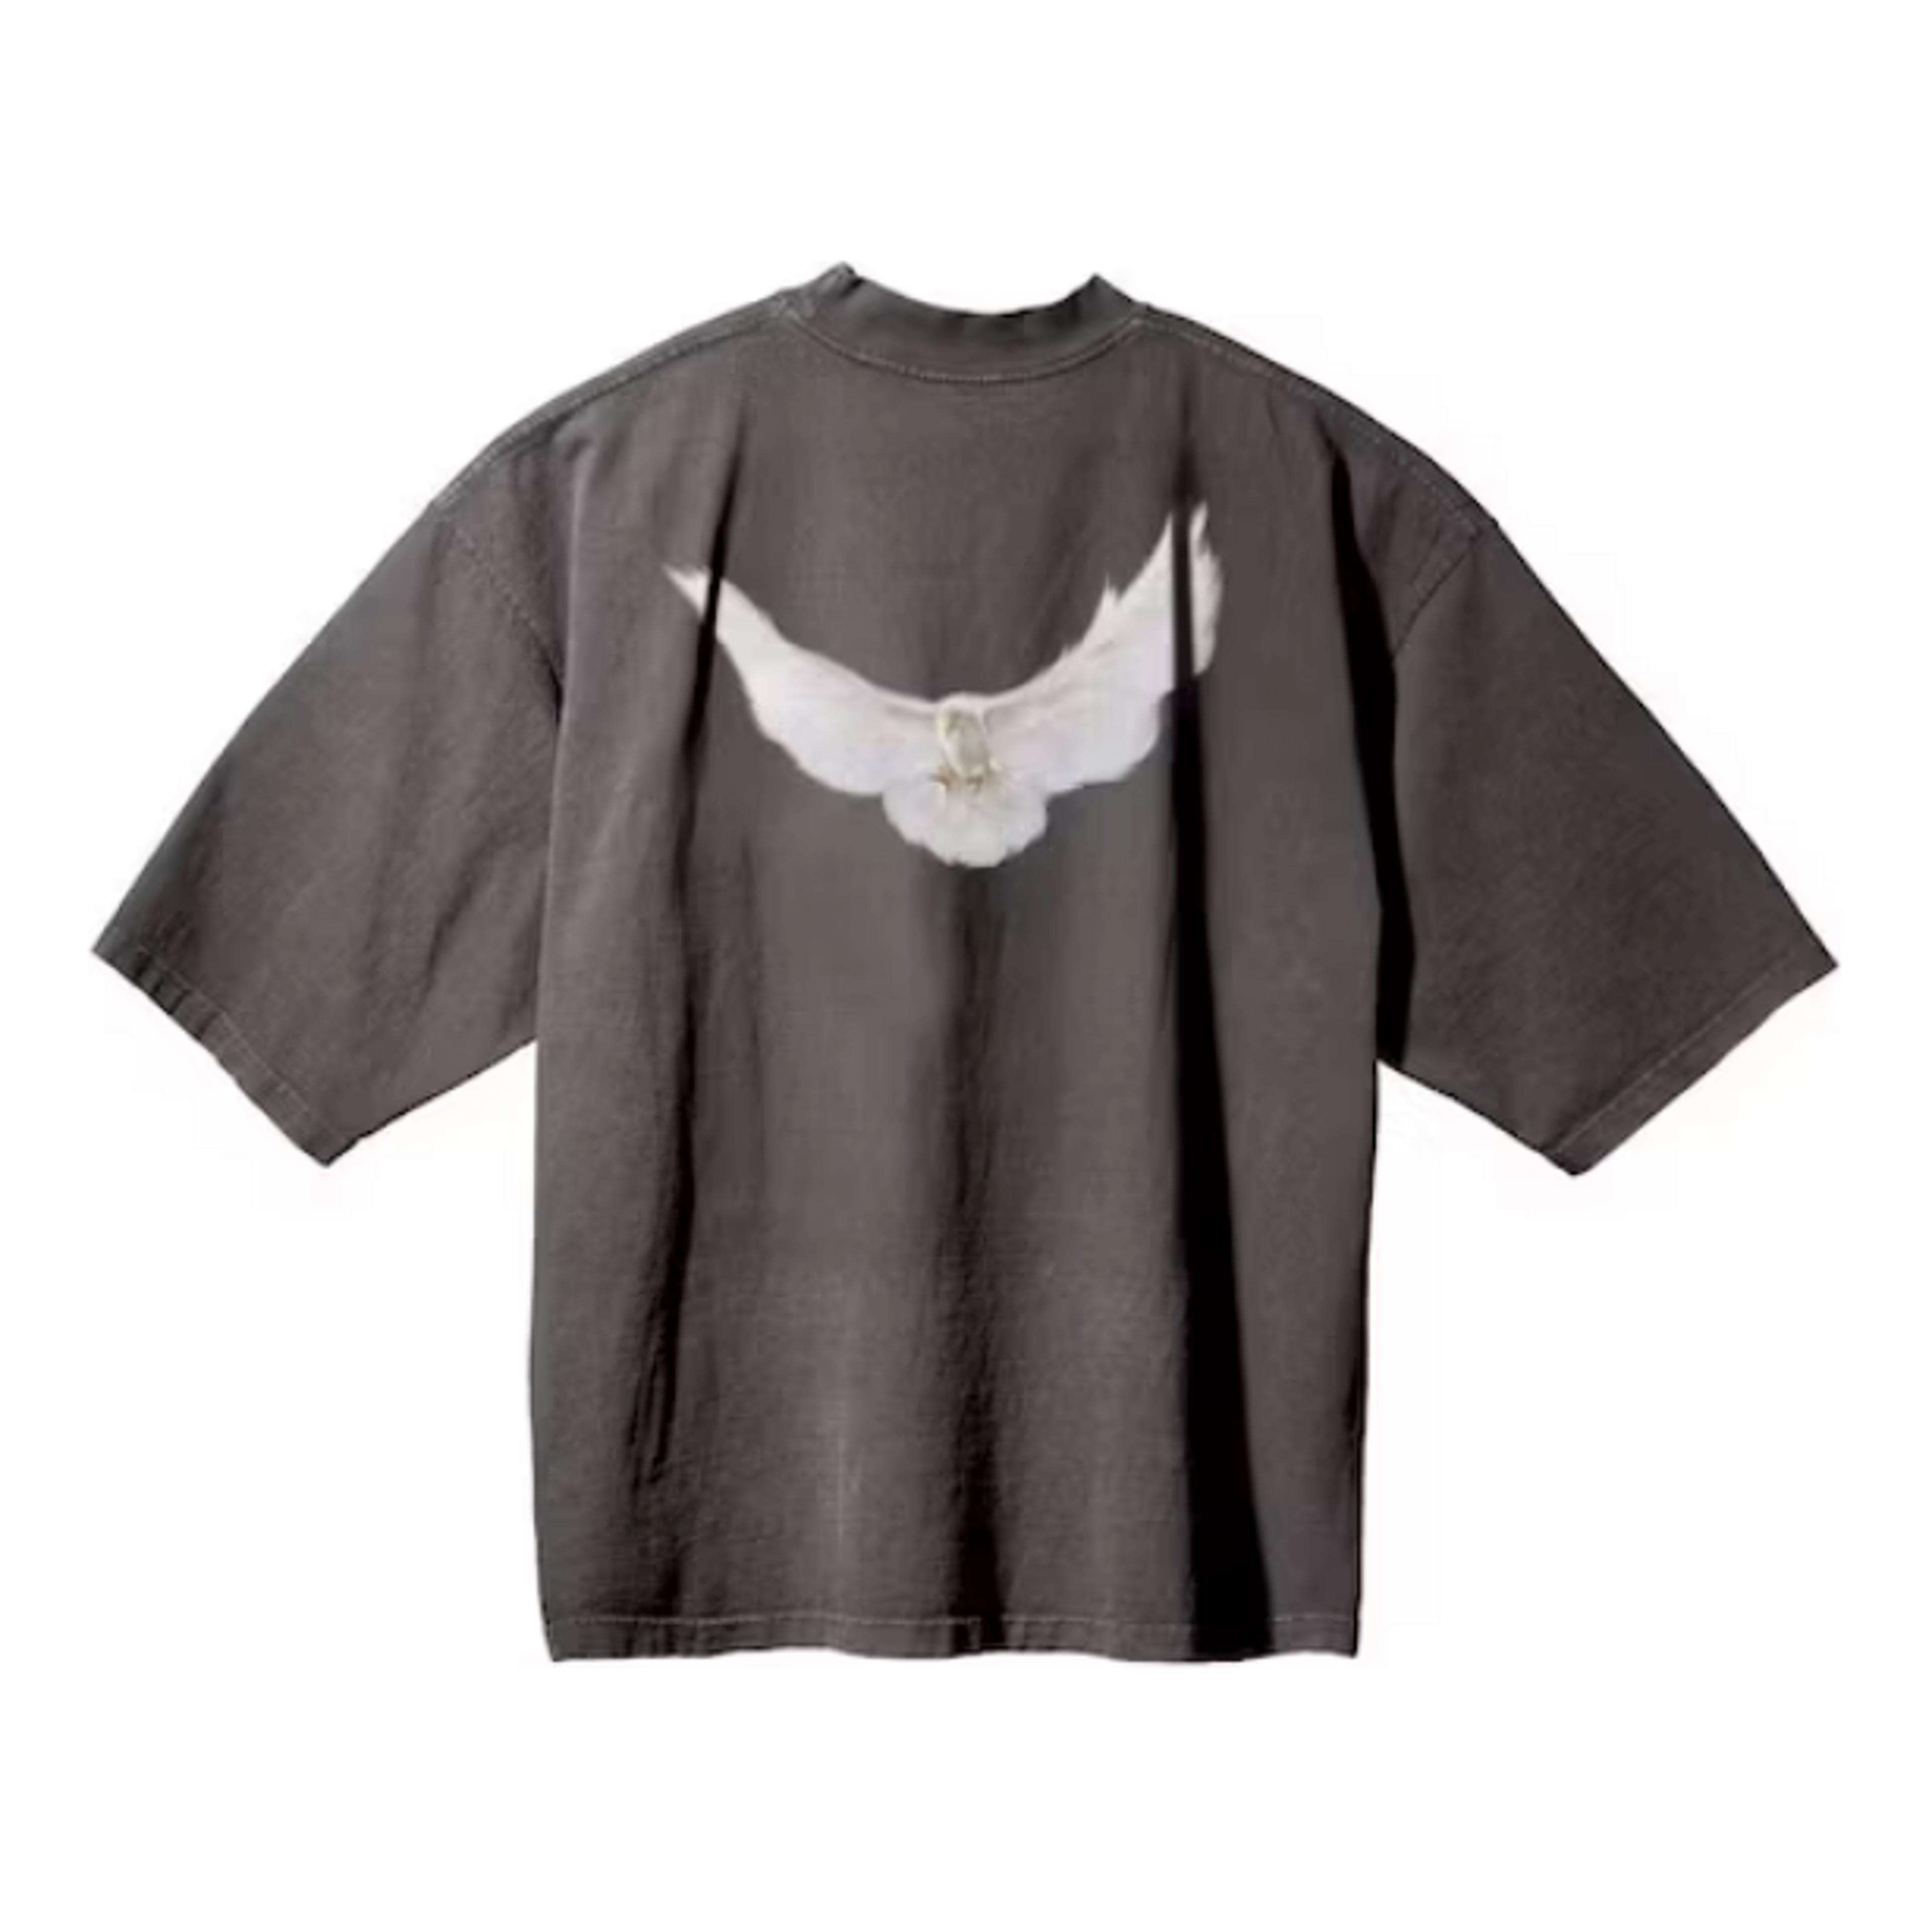 Alternate View 1 of Yeezy Gap Engineered by Balenciaga Dove 3/4 Sleeve T-shirt Grey